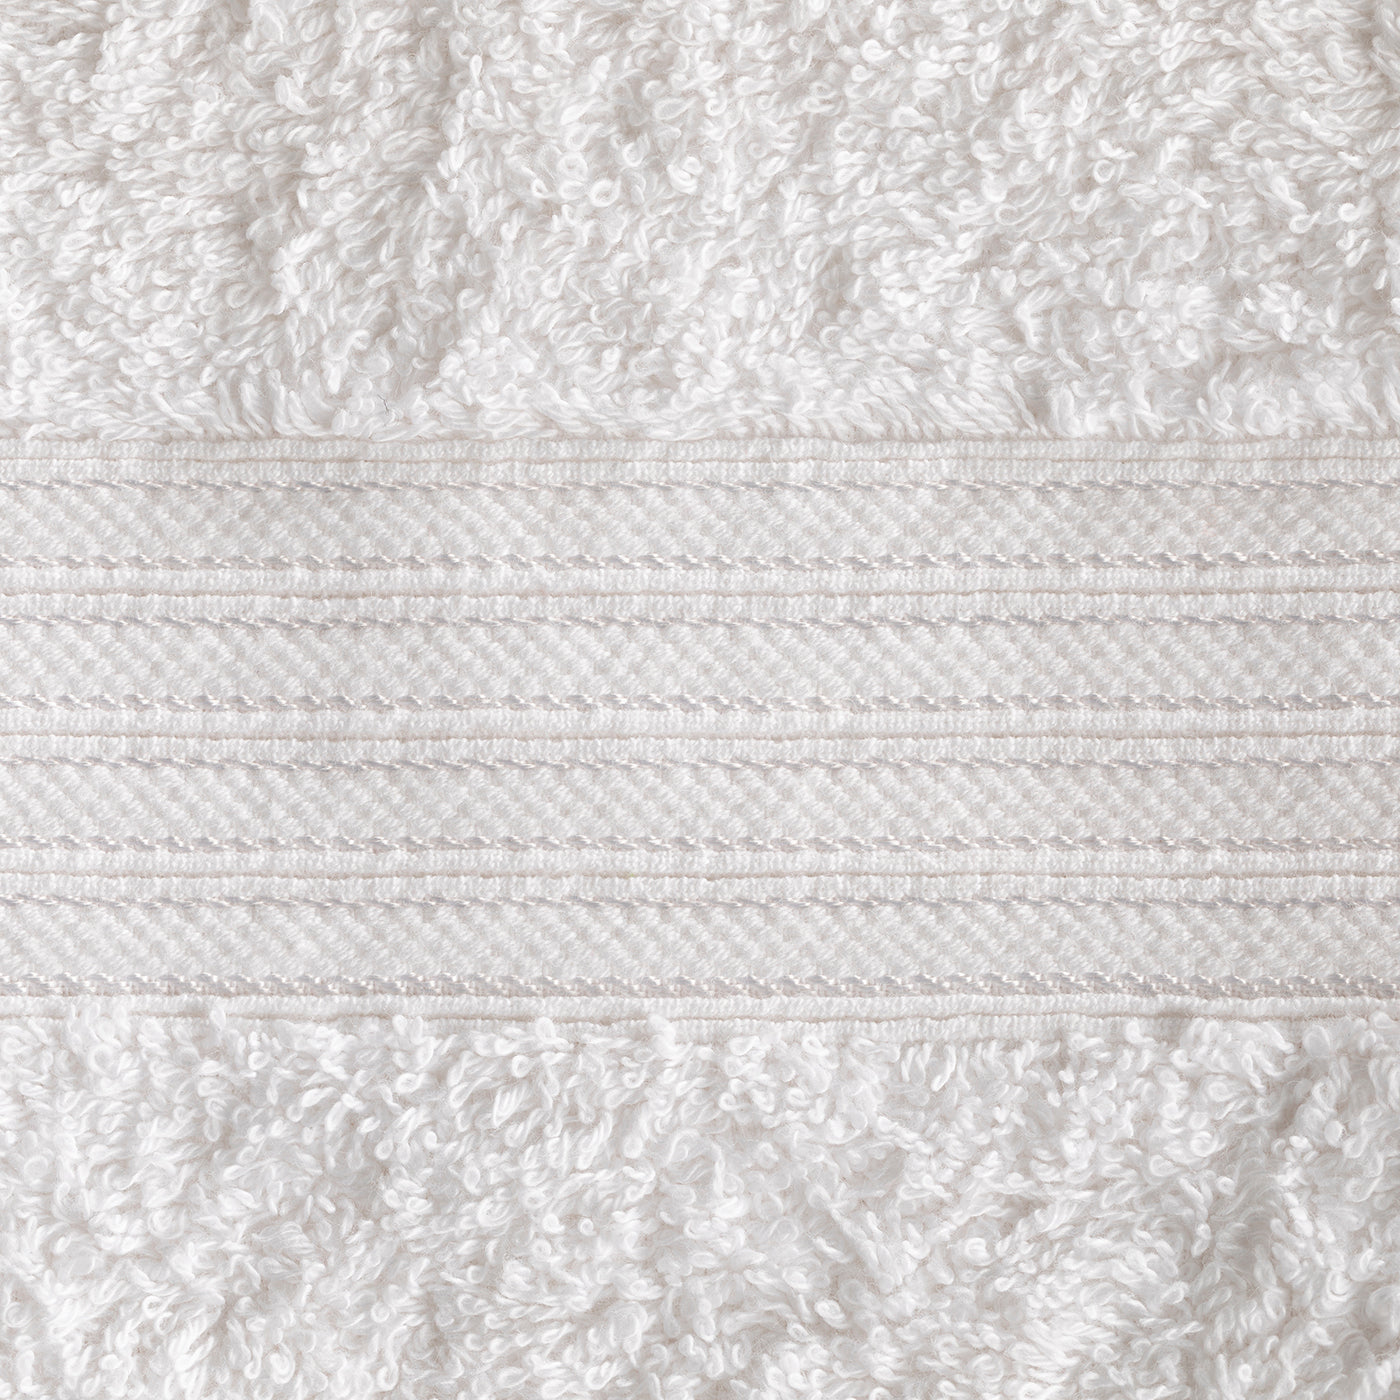 Sobel Westex Traditional 6 Piece Cotton Bath Towel Set, Gray